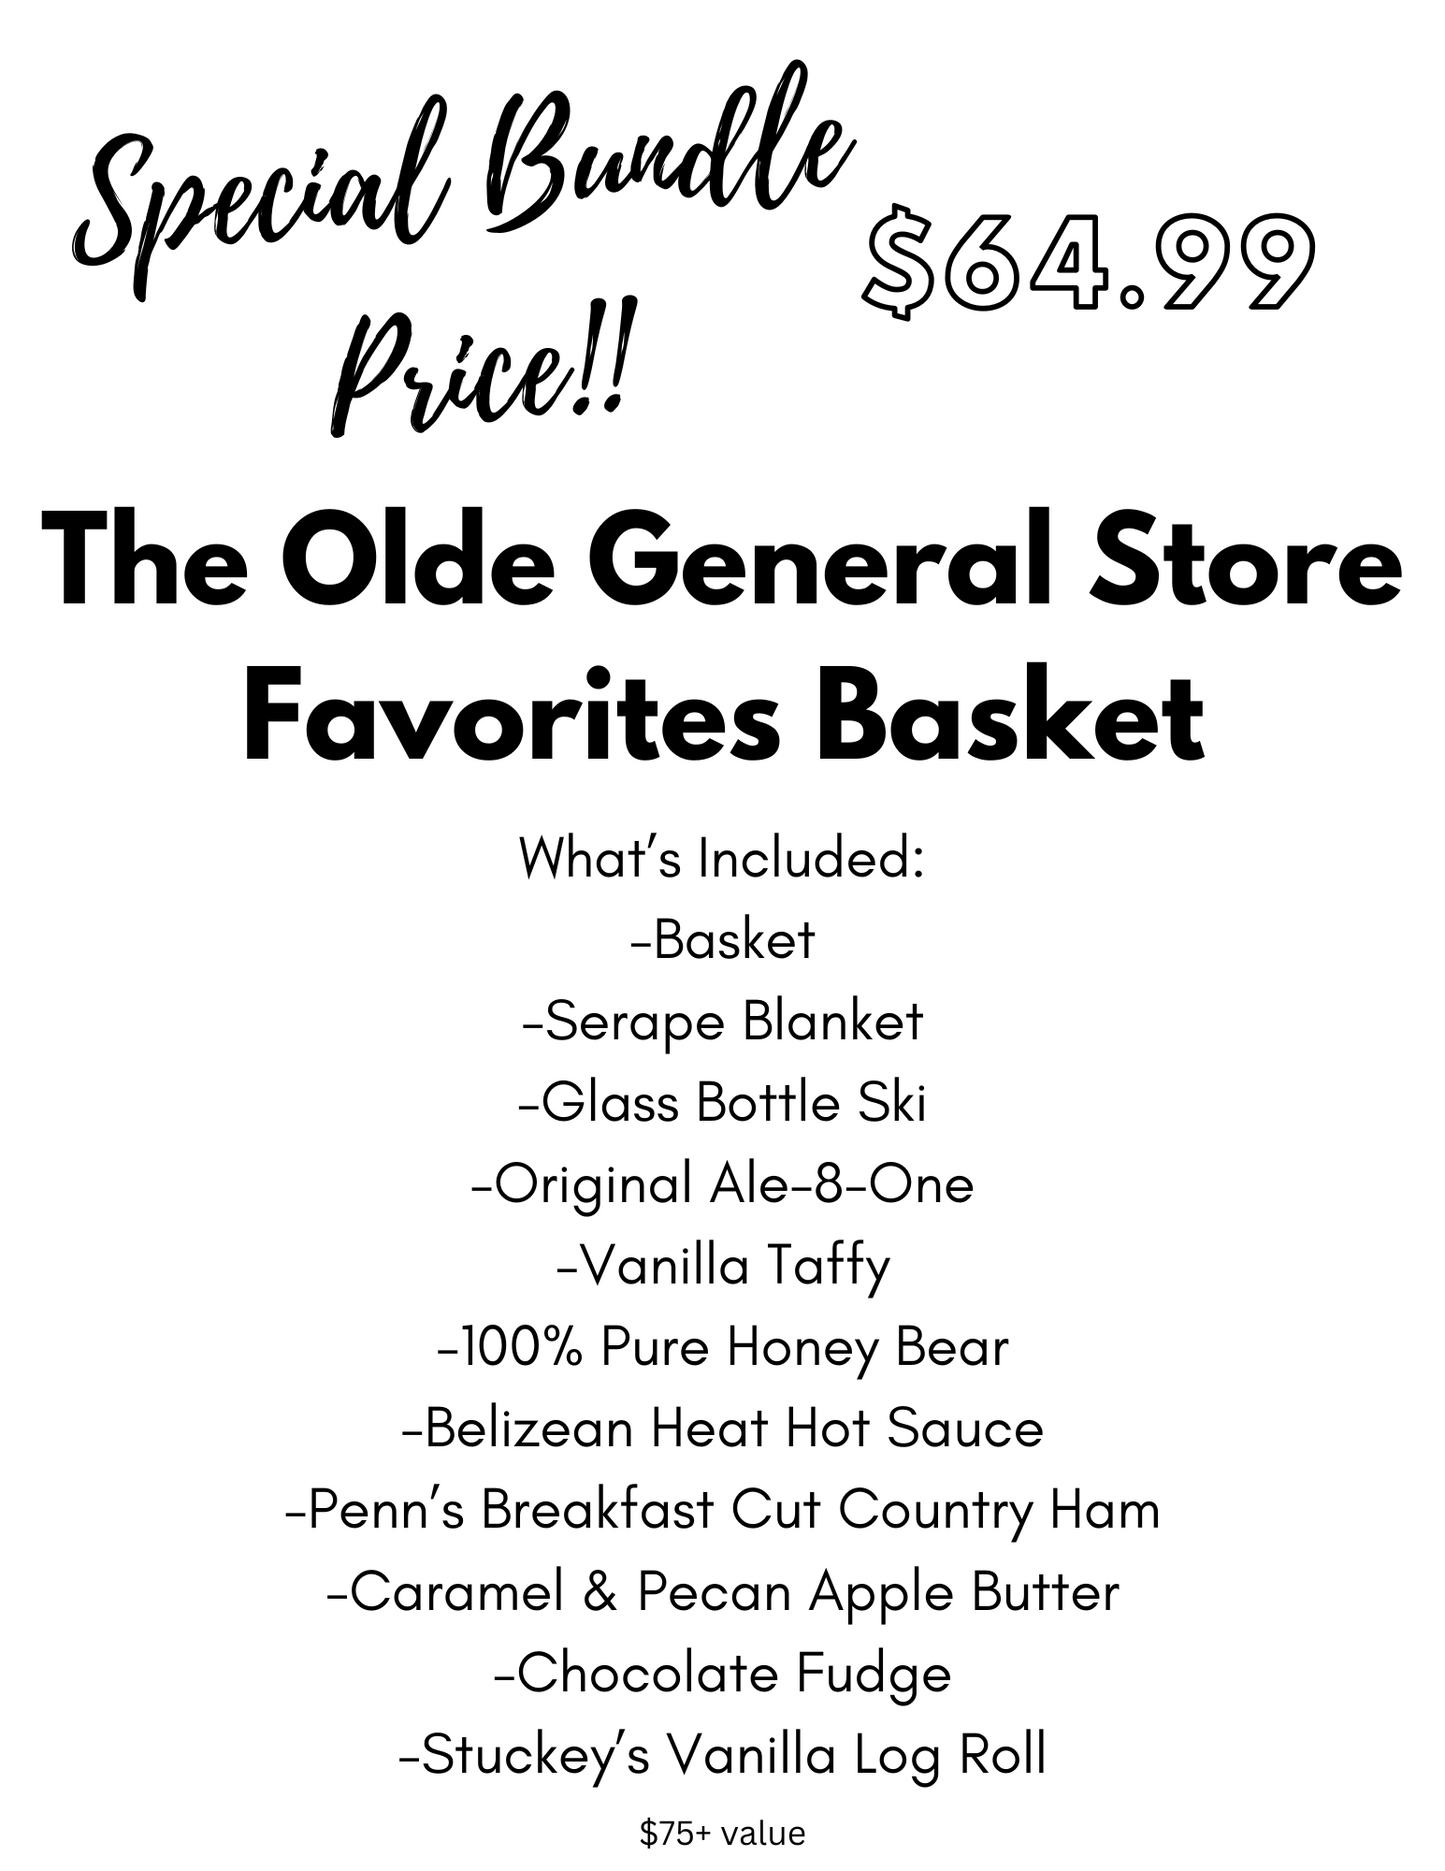 The Olde General Store Favorite's Basket